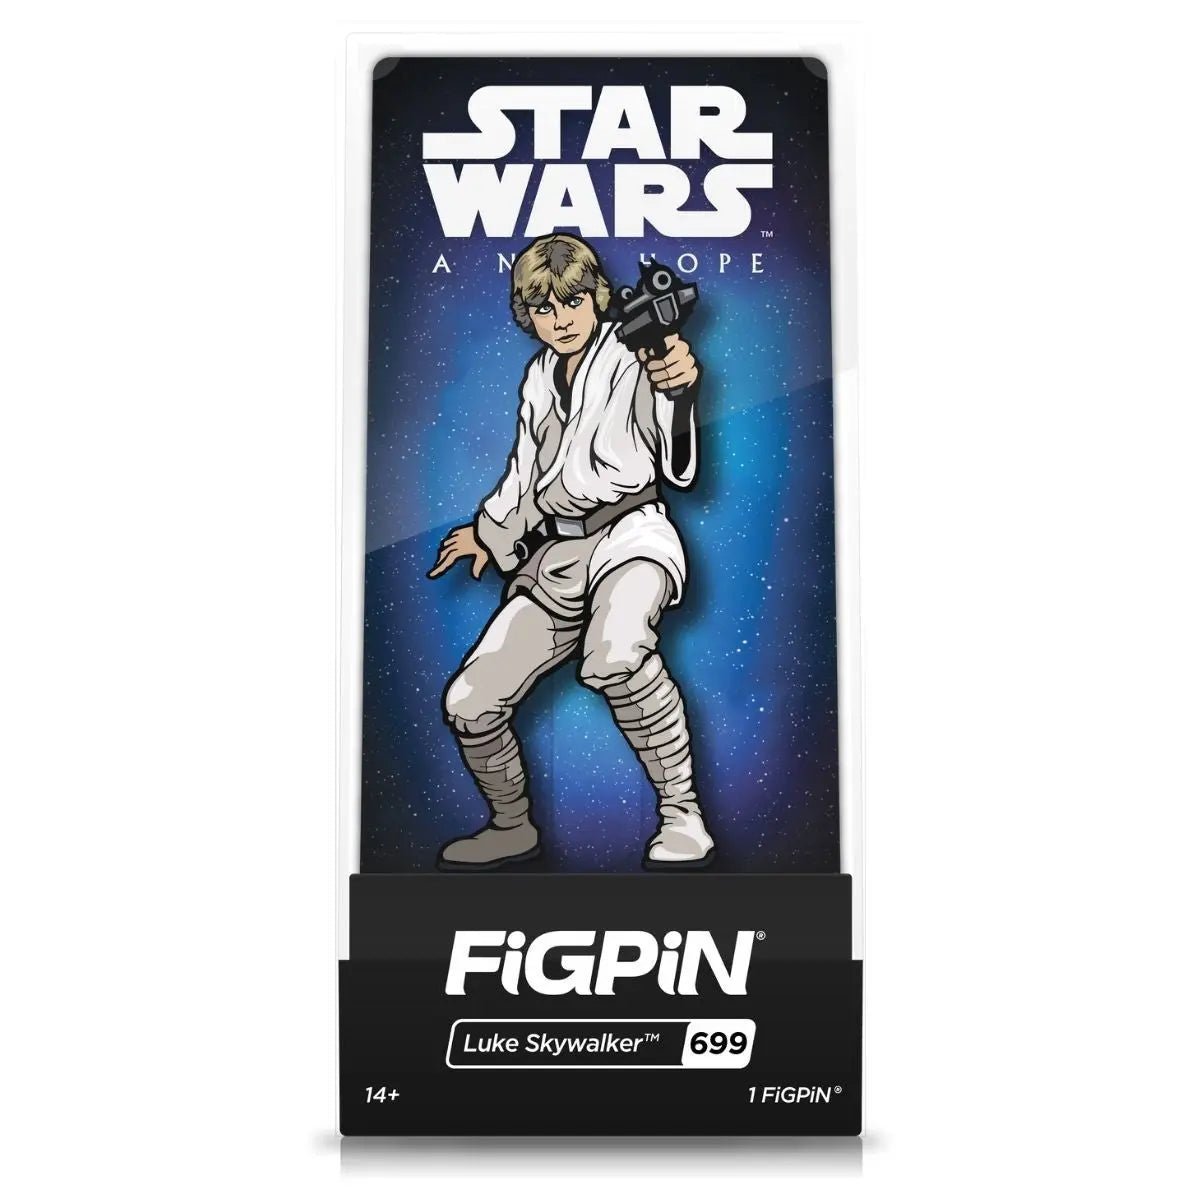 Star Wars: A New Hope Luke Skywalker FiGPiN 3-Inch Enamel Pin #699 - Simon's Collectibles